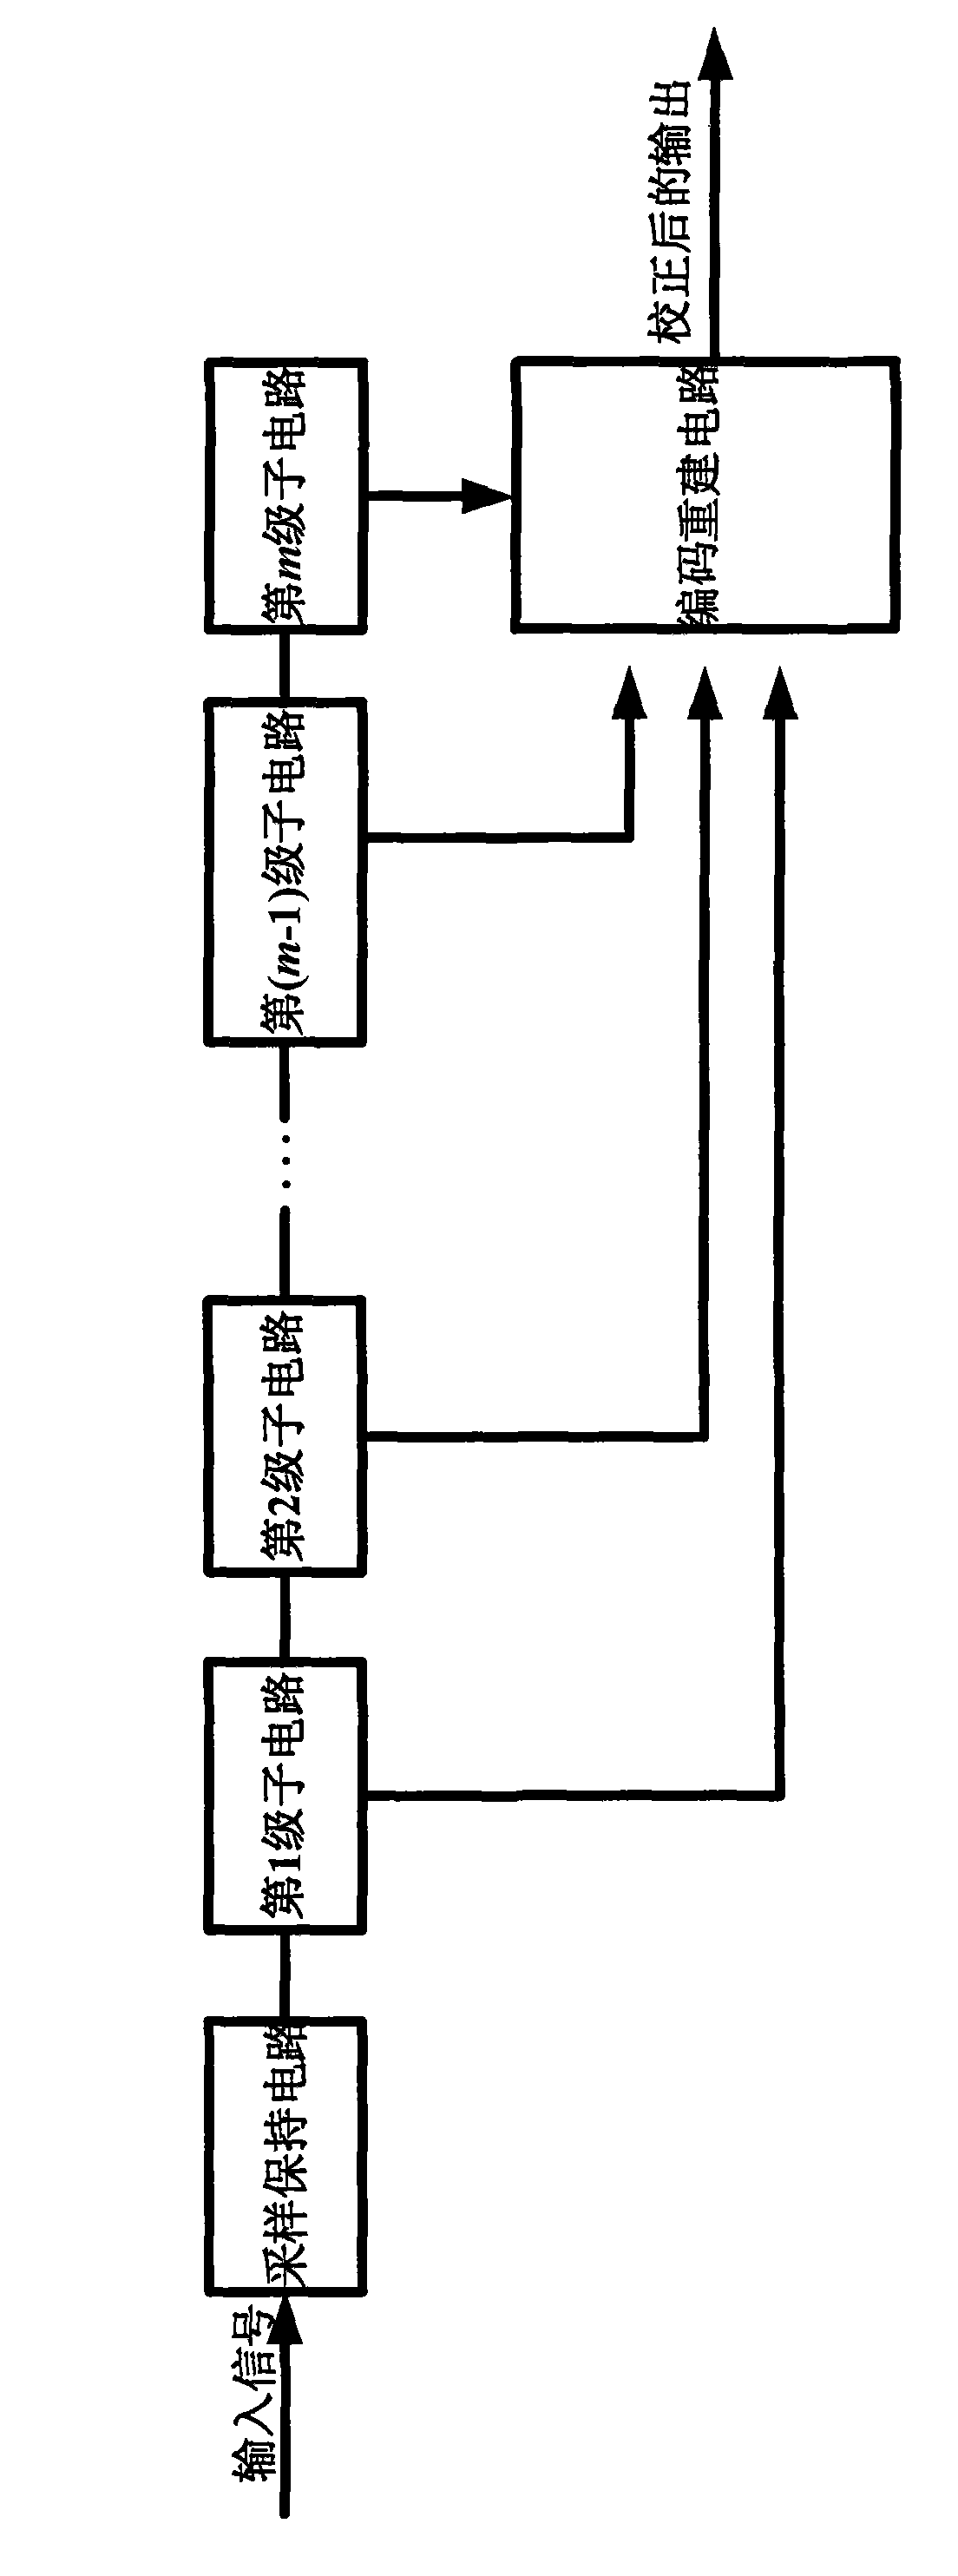 Single redundant bit digital correction method used for assembly line A/D converter